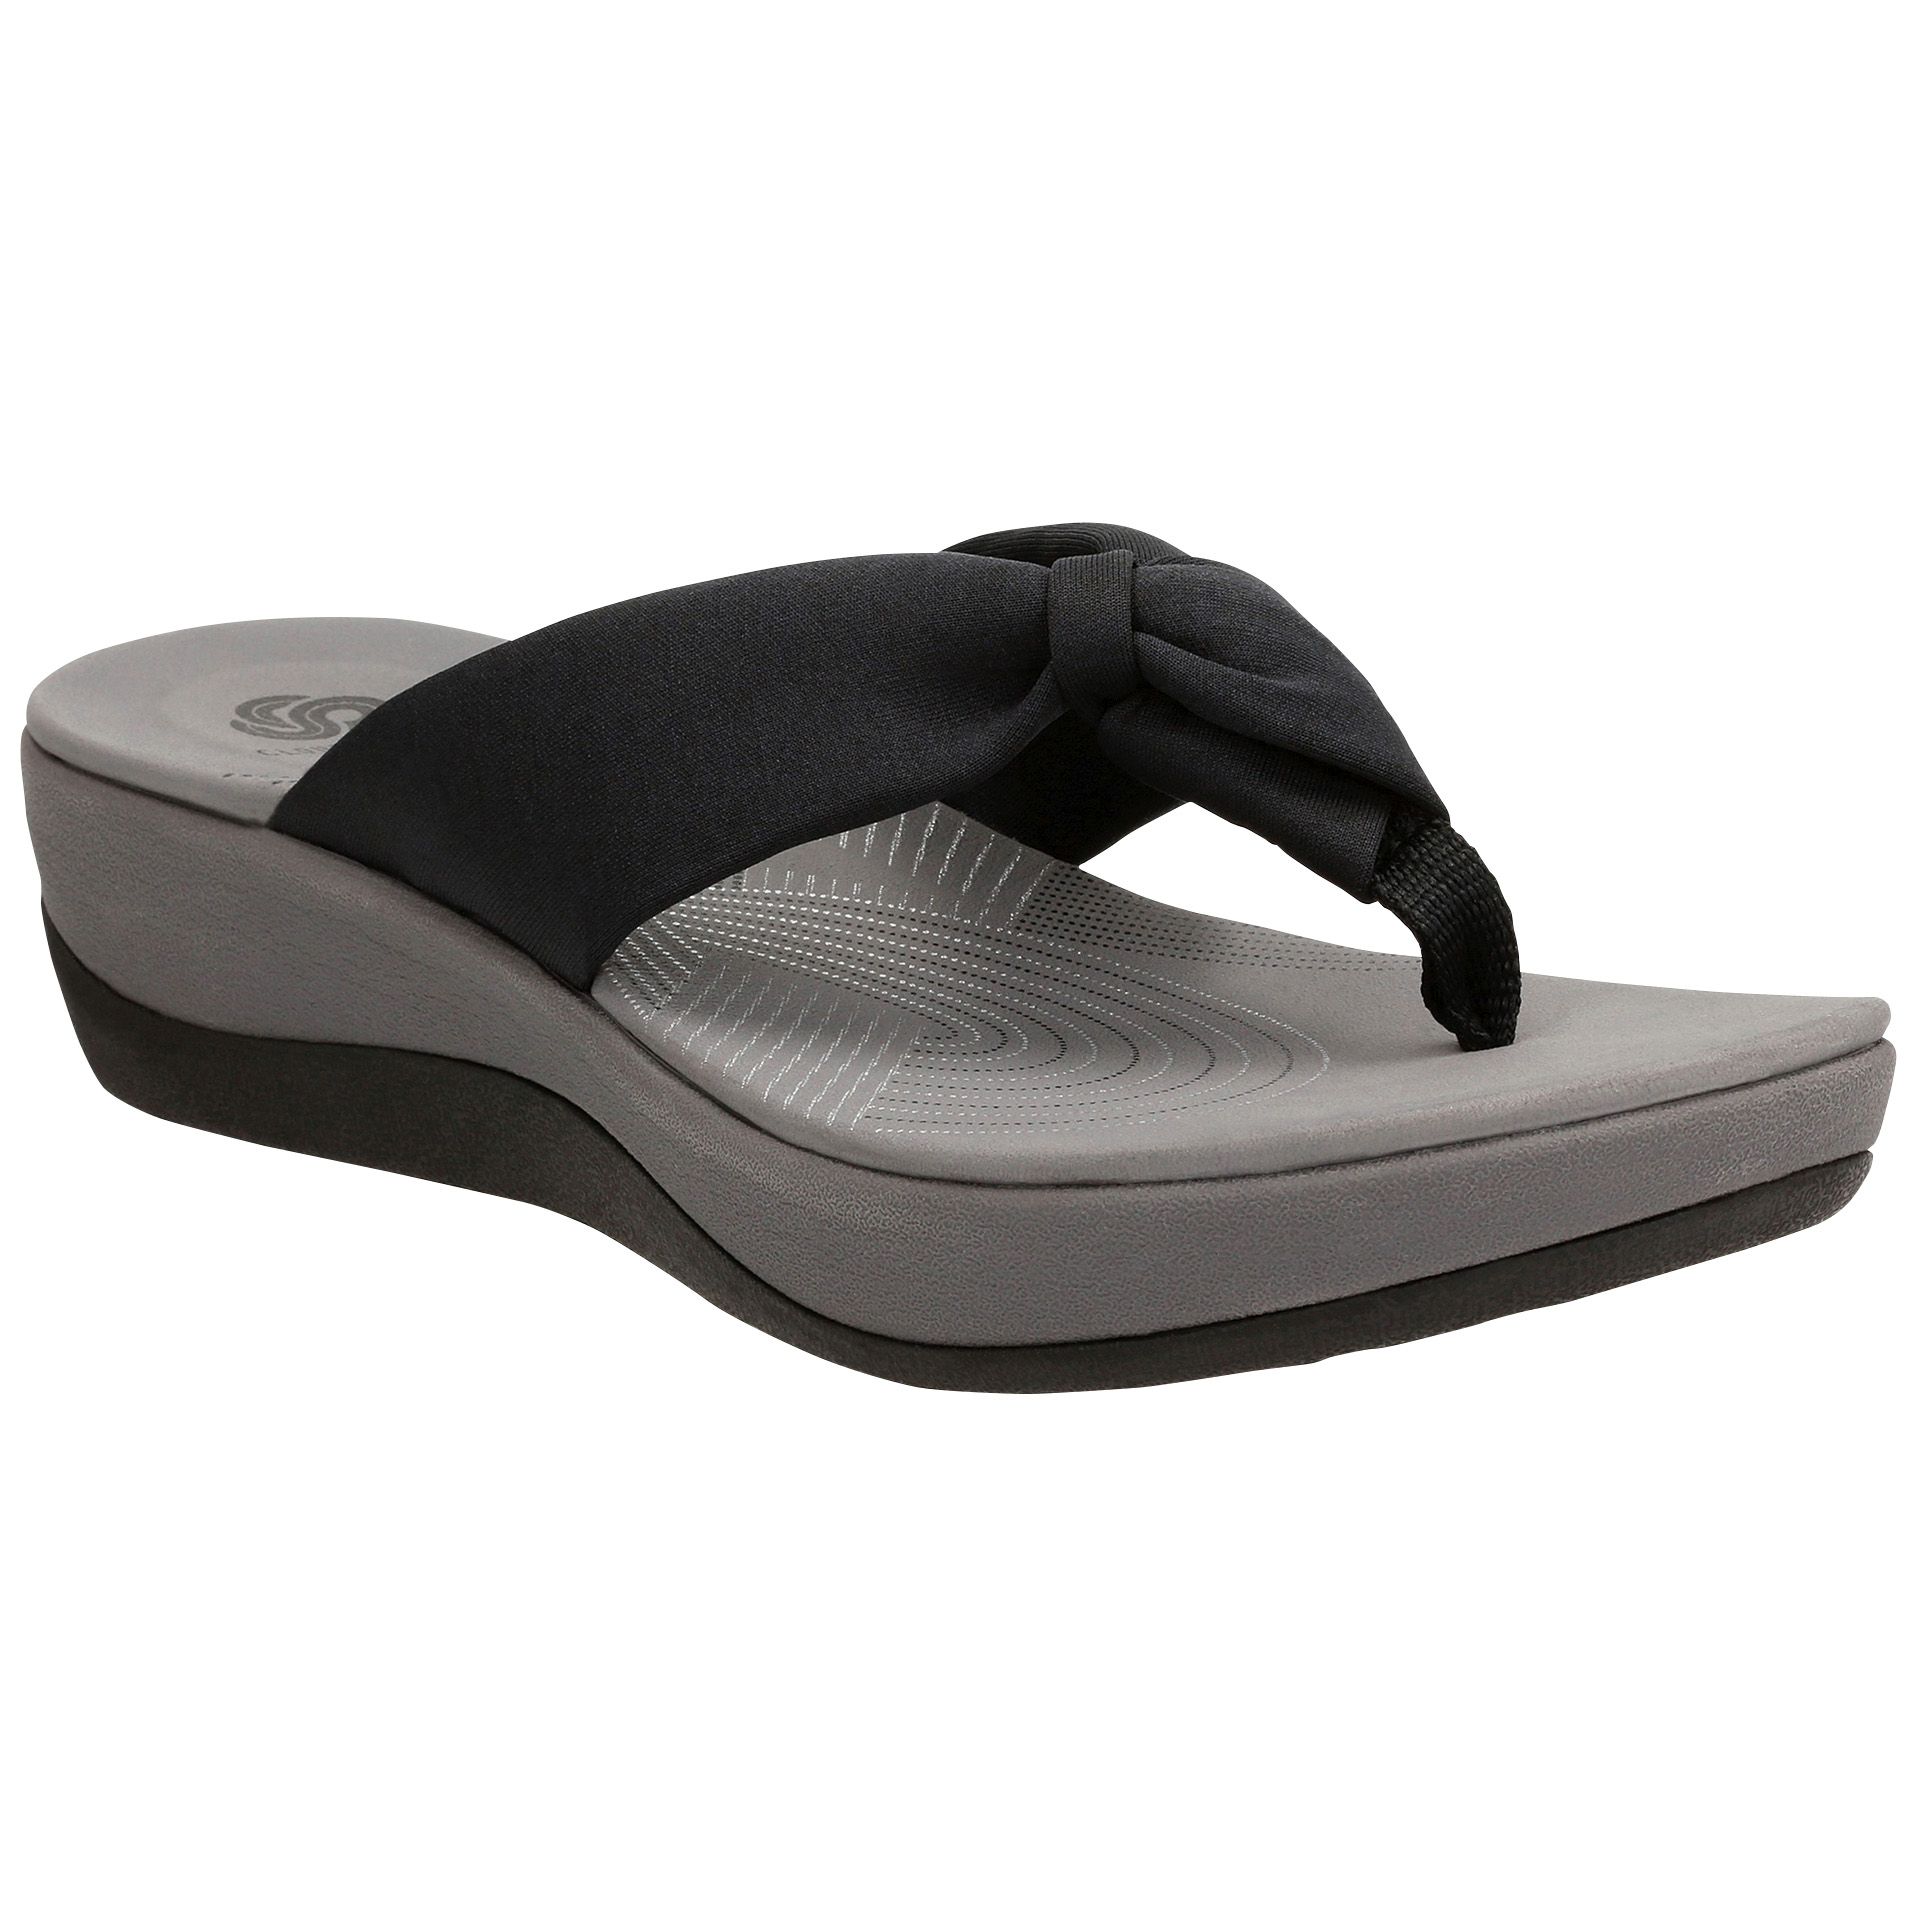 Fingerhut - Clarks Women's Glison Thong Sandal